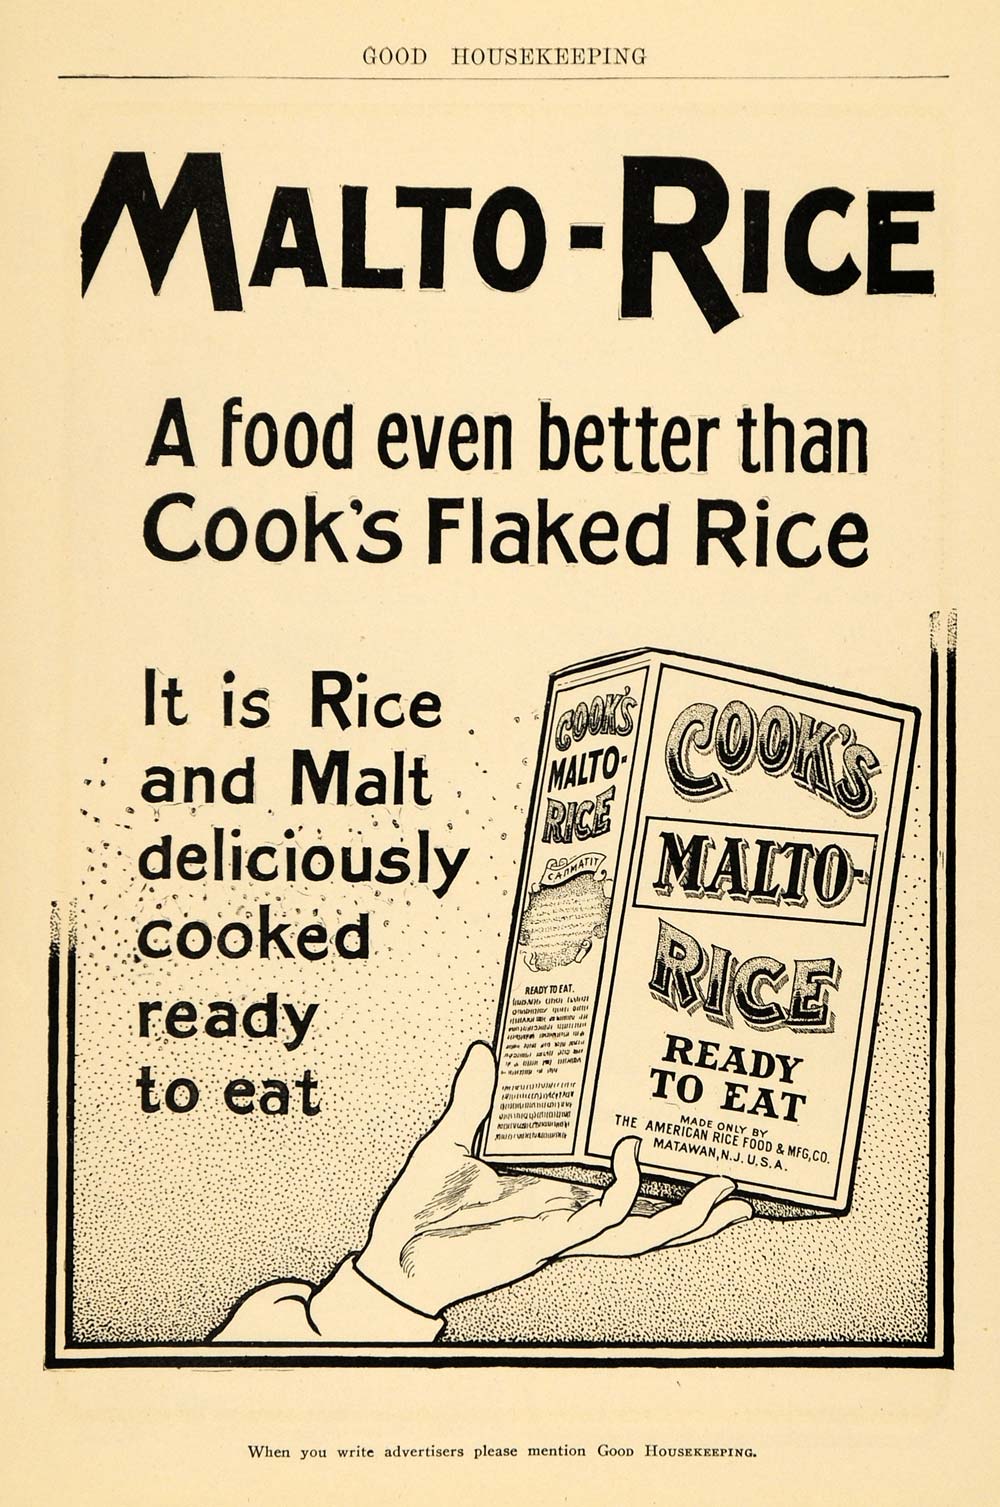 1904 Ad Cook's Malto-Rice Ready to Eat Box Matawan NJ - ORIGINAL ADVERTISING GH2